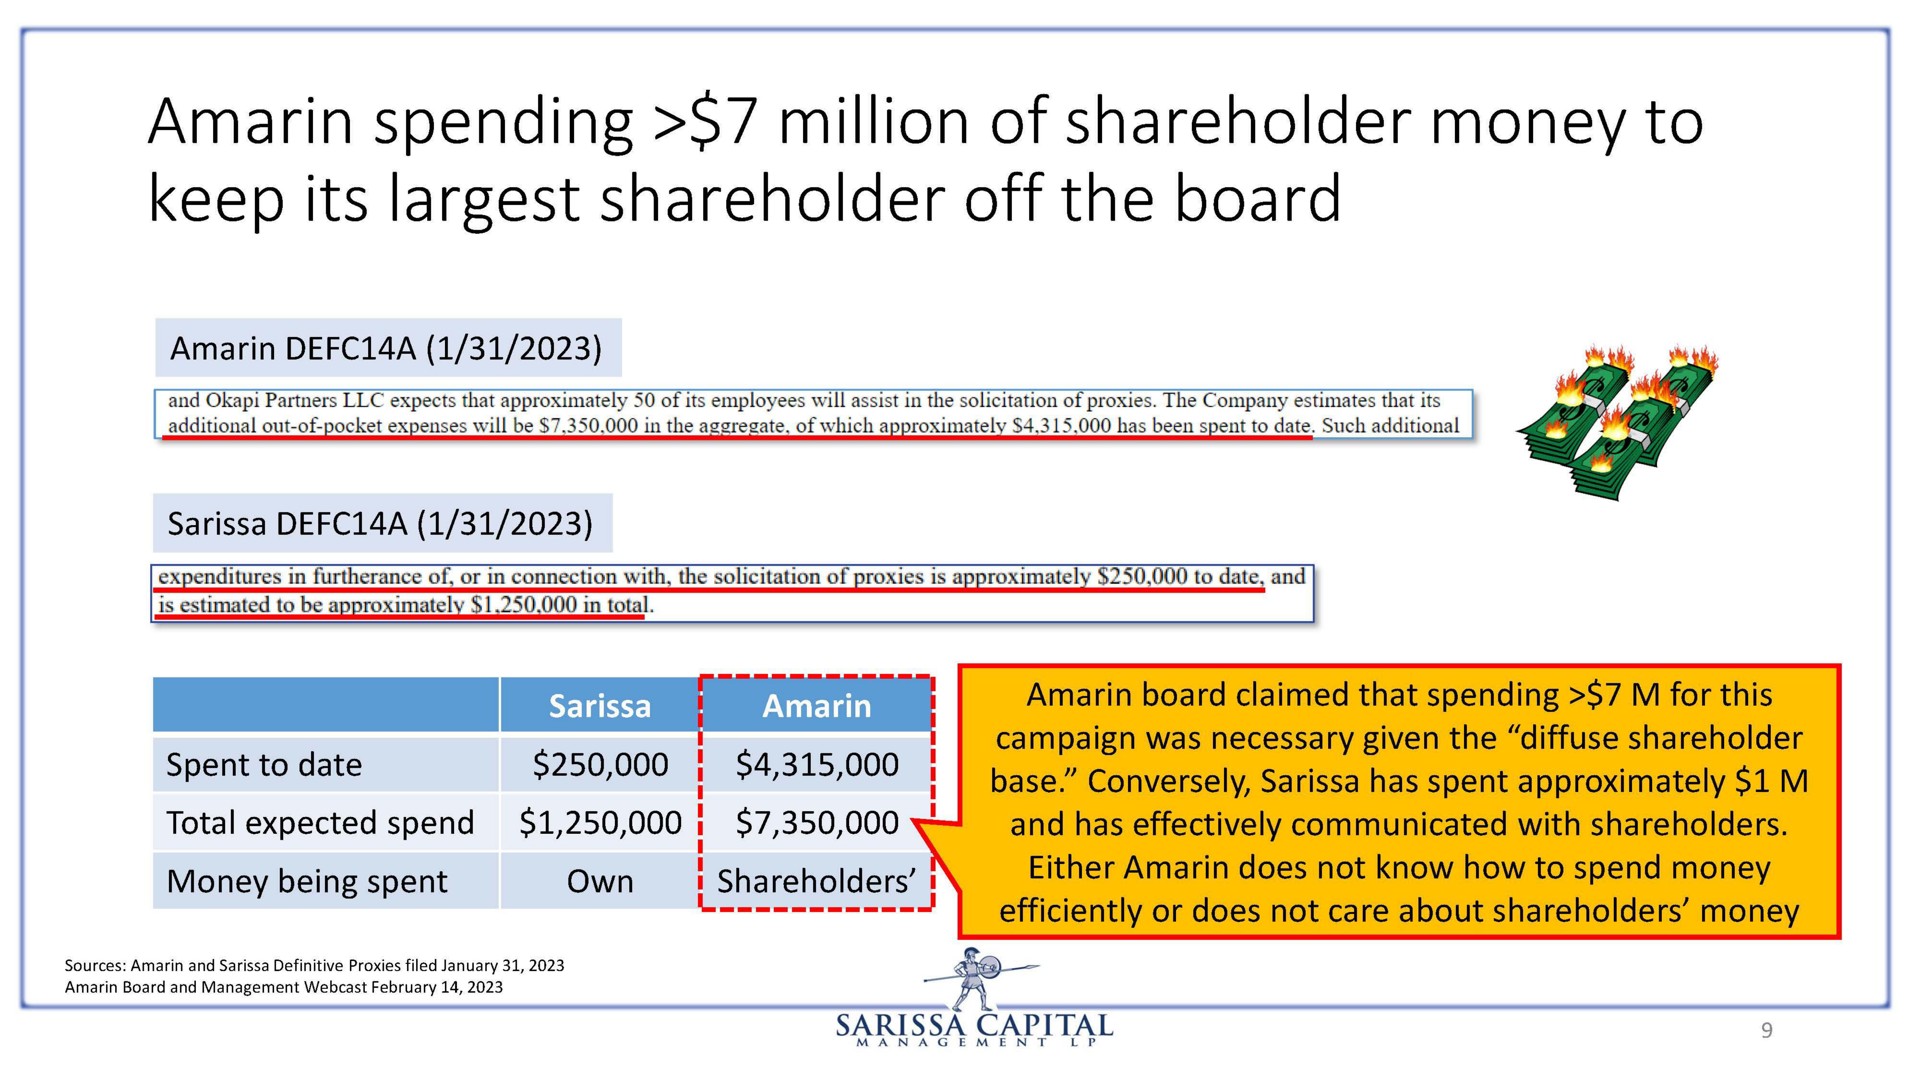 amarin spending million of shareholder money to keep its shareholder off the board | Sarissa Capital